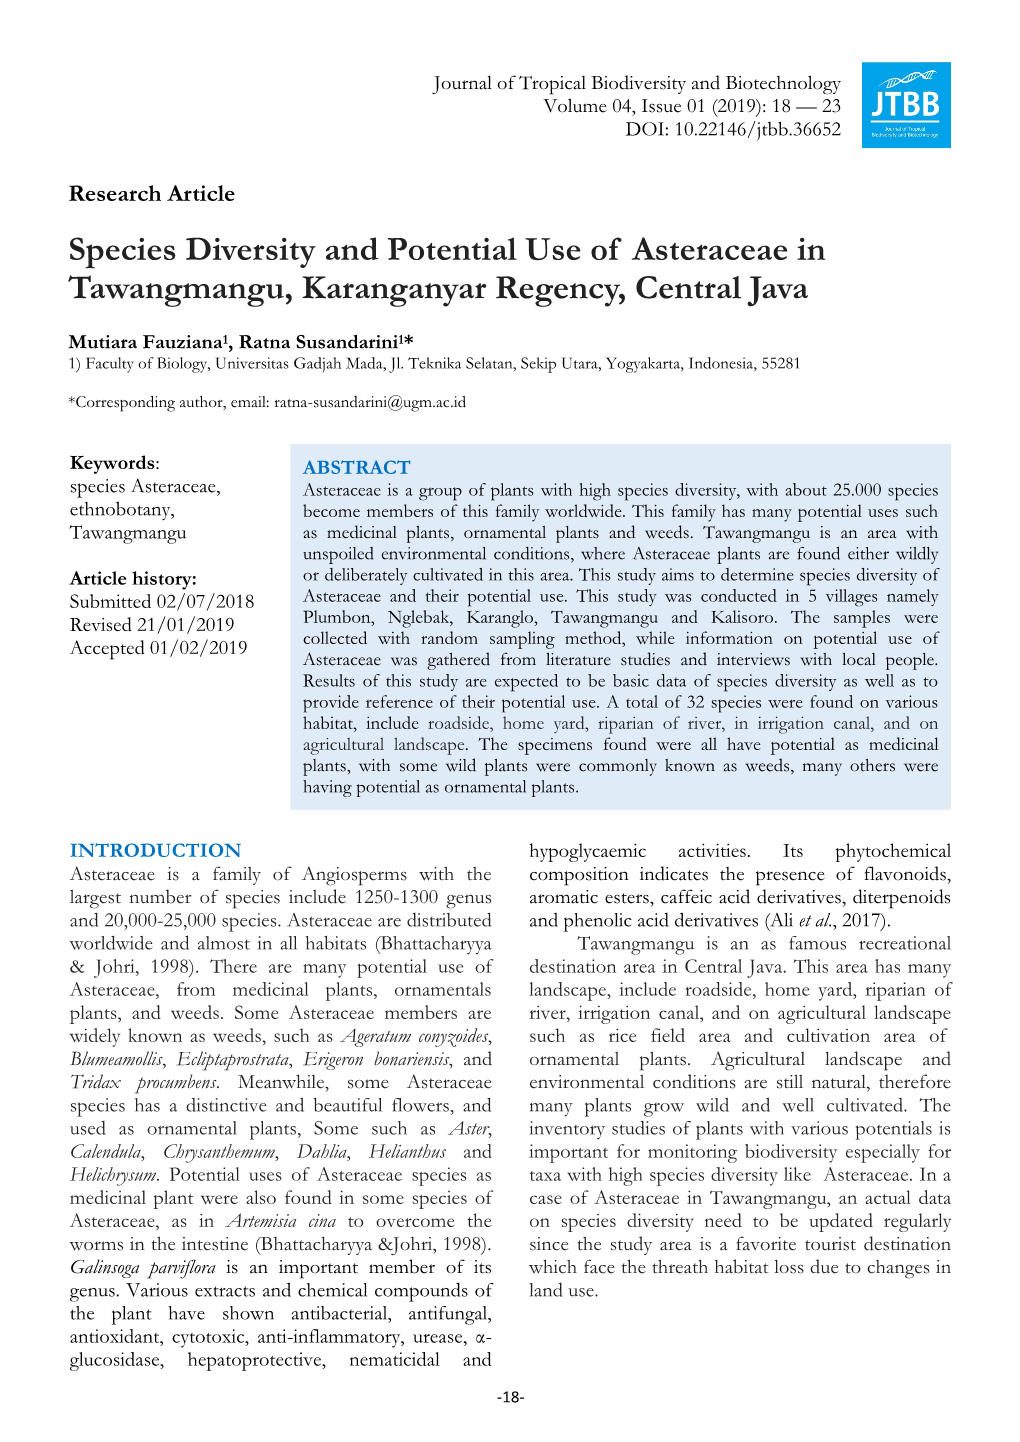 Species Diversity and Potential Use of Asteraceae in Tawangmangu, Karanganyar Regency, Central Java